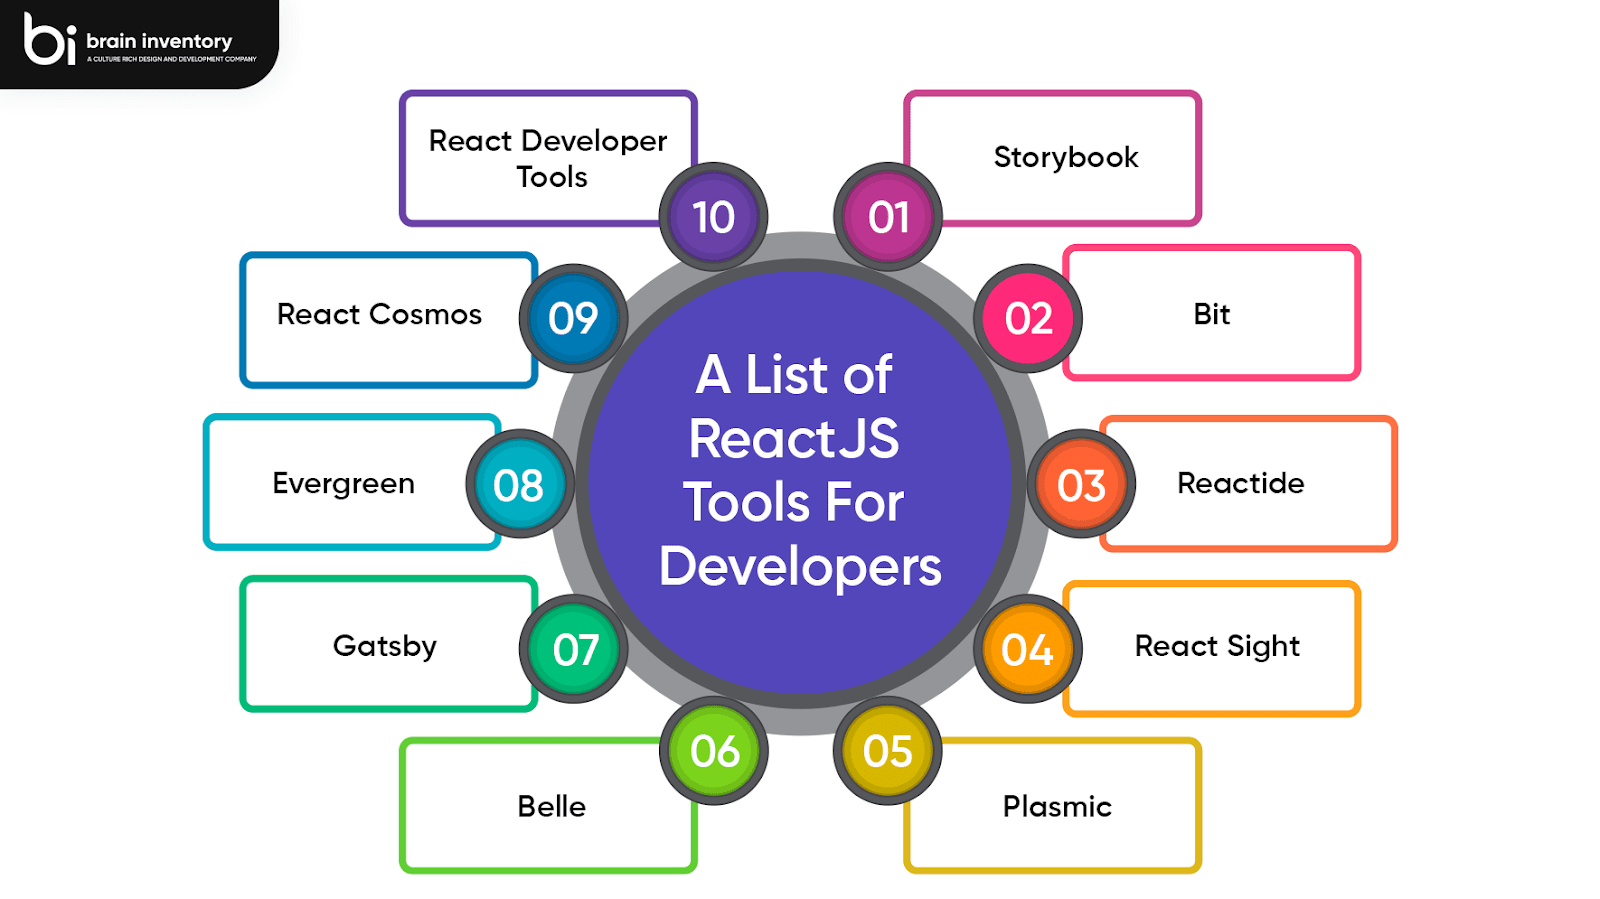 ReactJS Tools For Developers